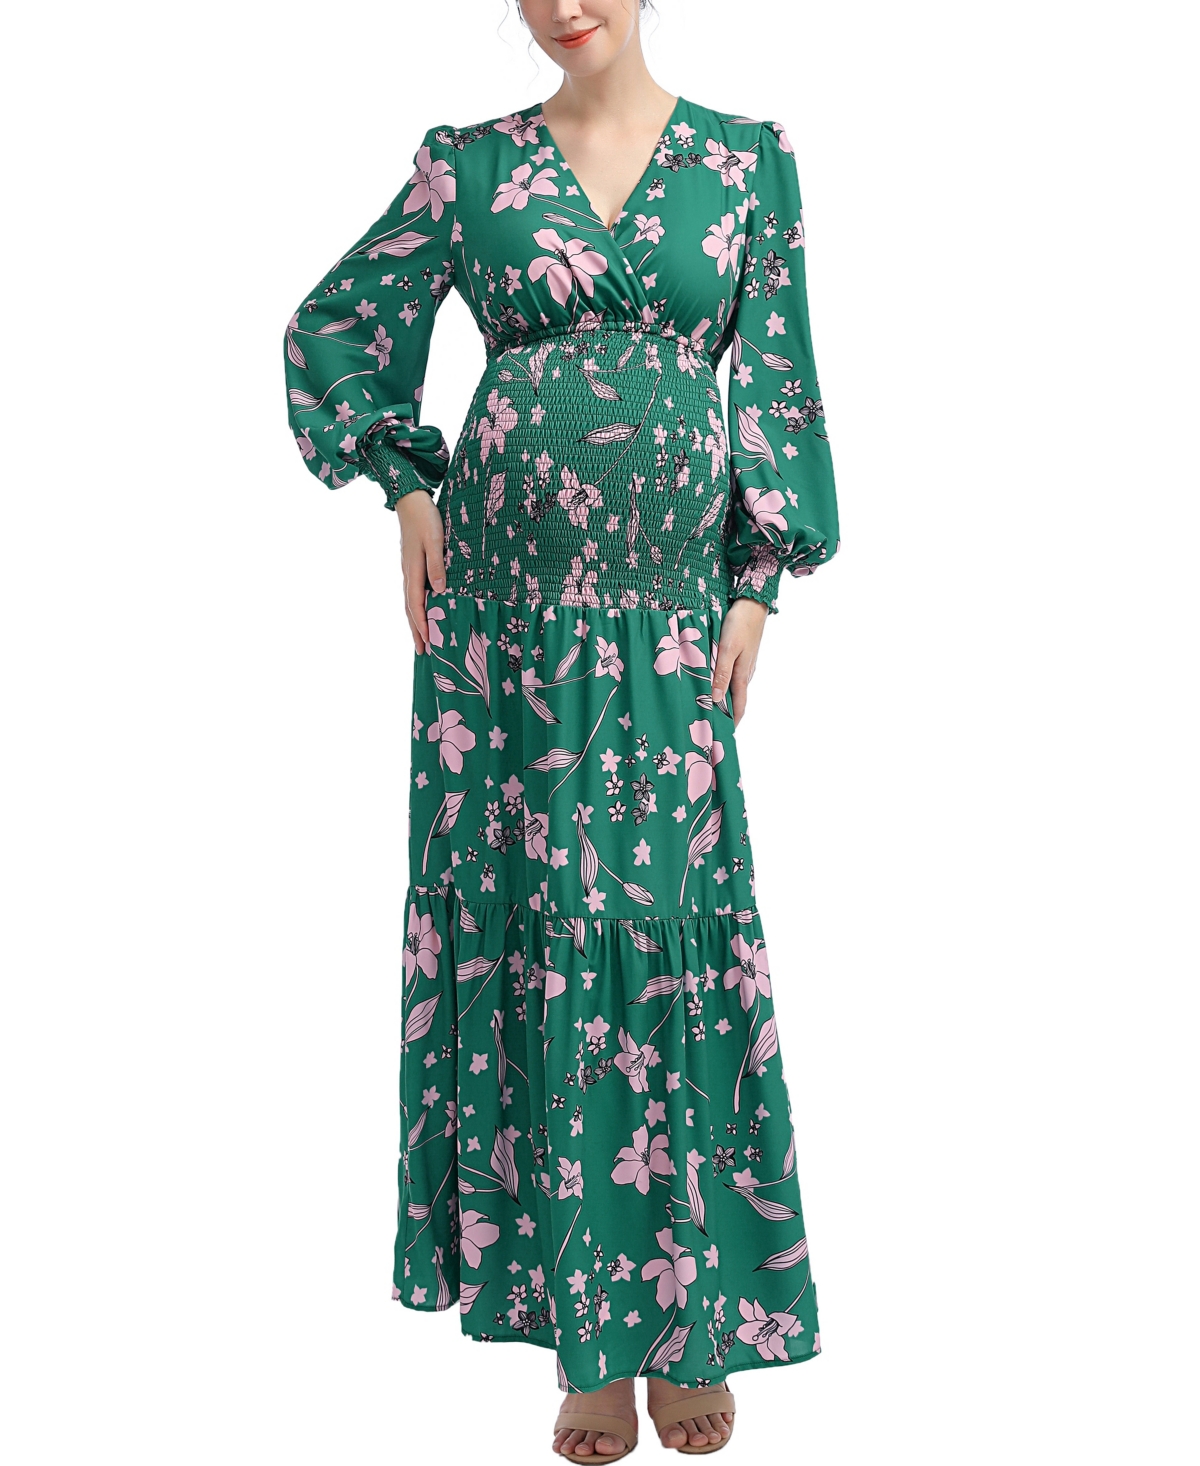 kimi + kai Maternity Floral Print Smocked Maxi Dress - Multicolored